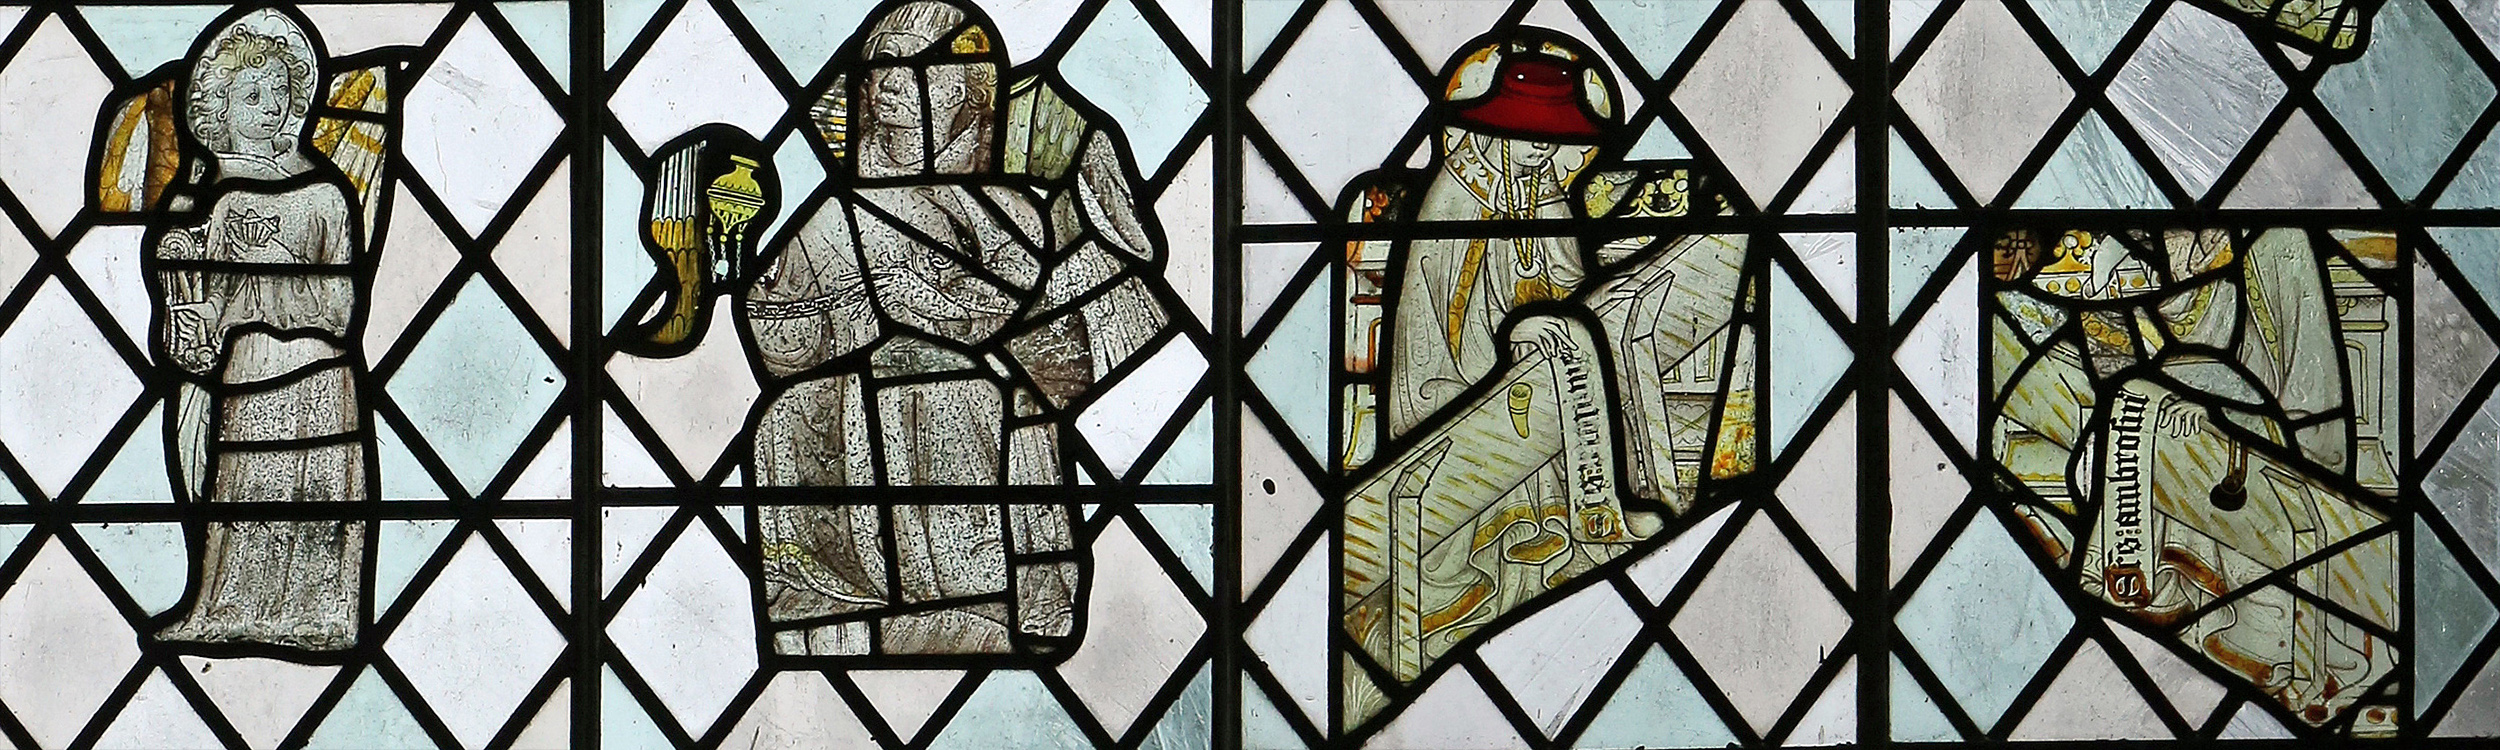 North chancel window